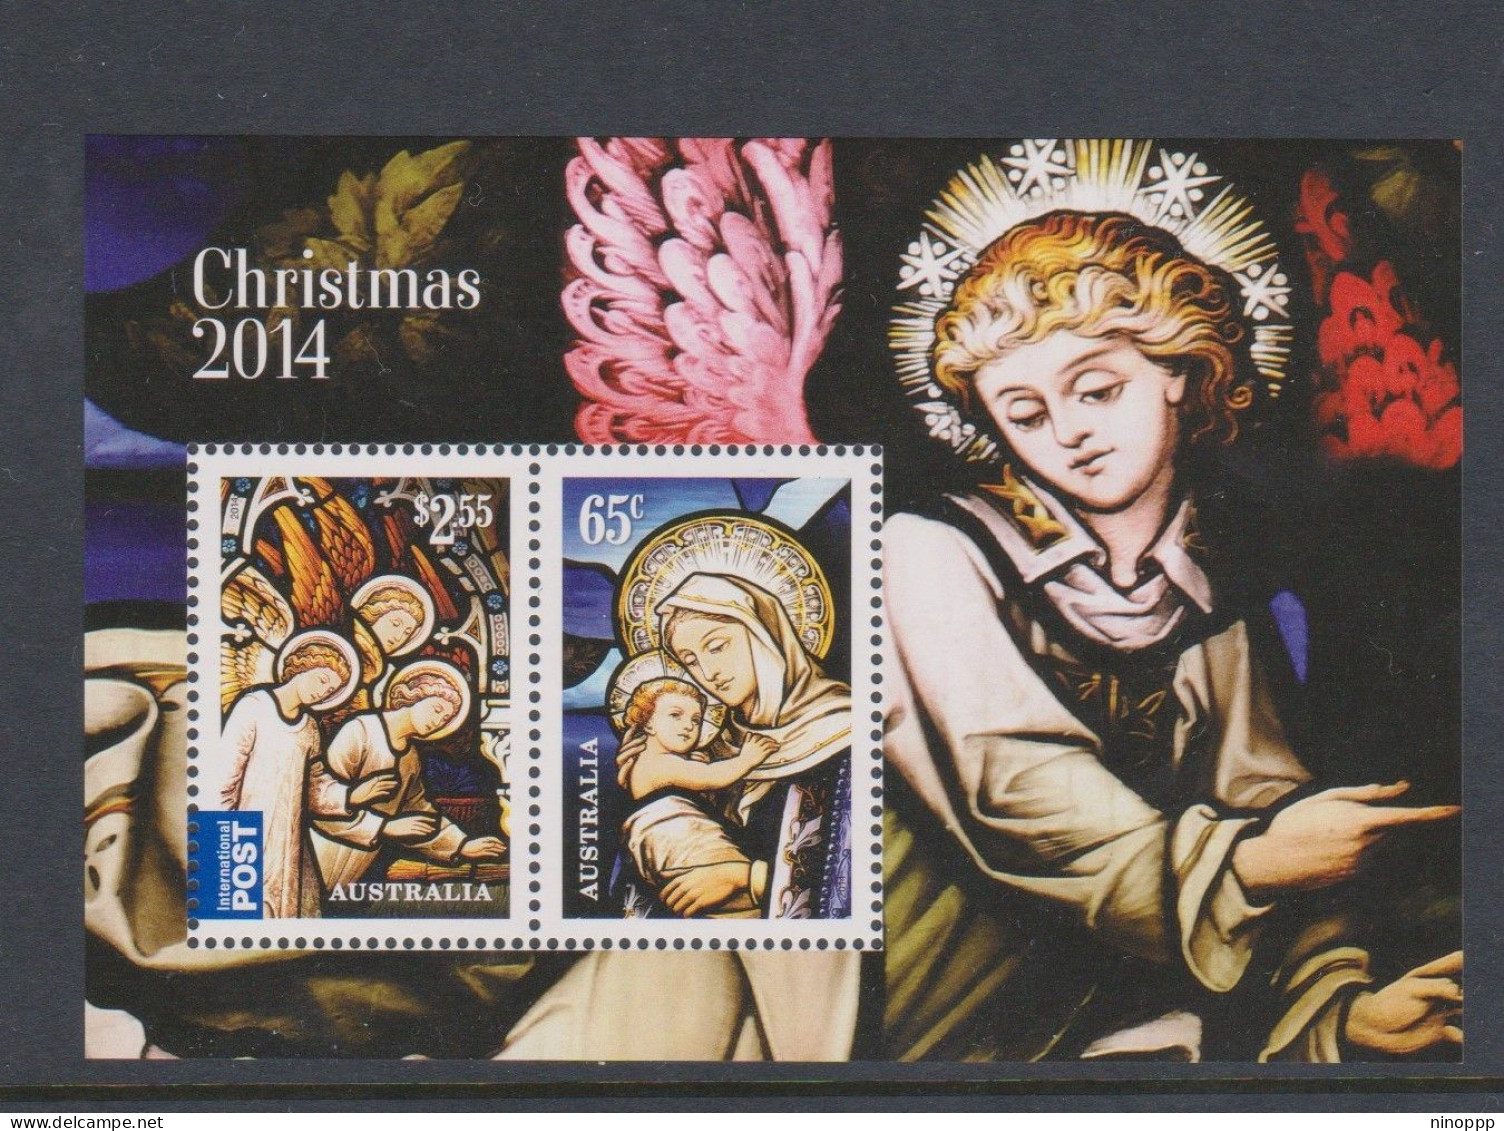 Australia ASC 3254MS 2014 Christmas Miniature Sheet,mint Never Hinged - Mint Stamps